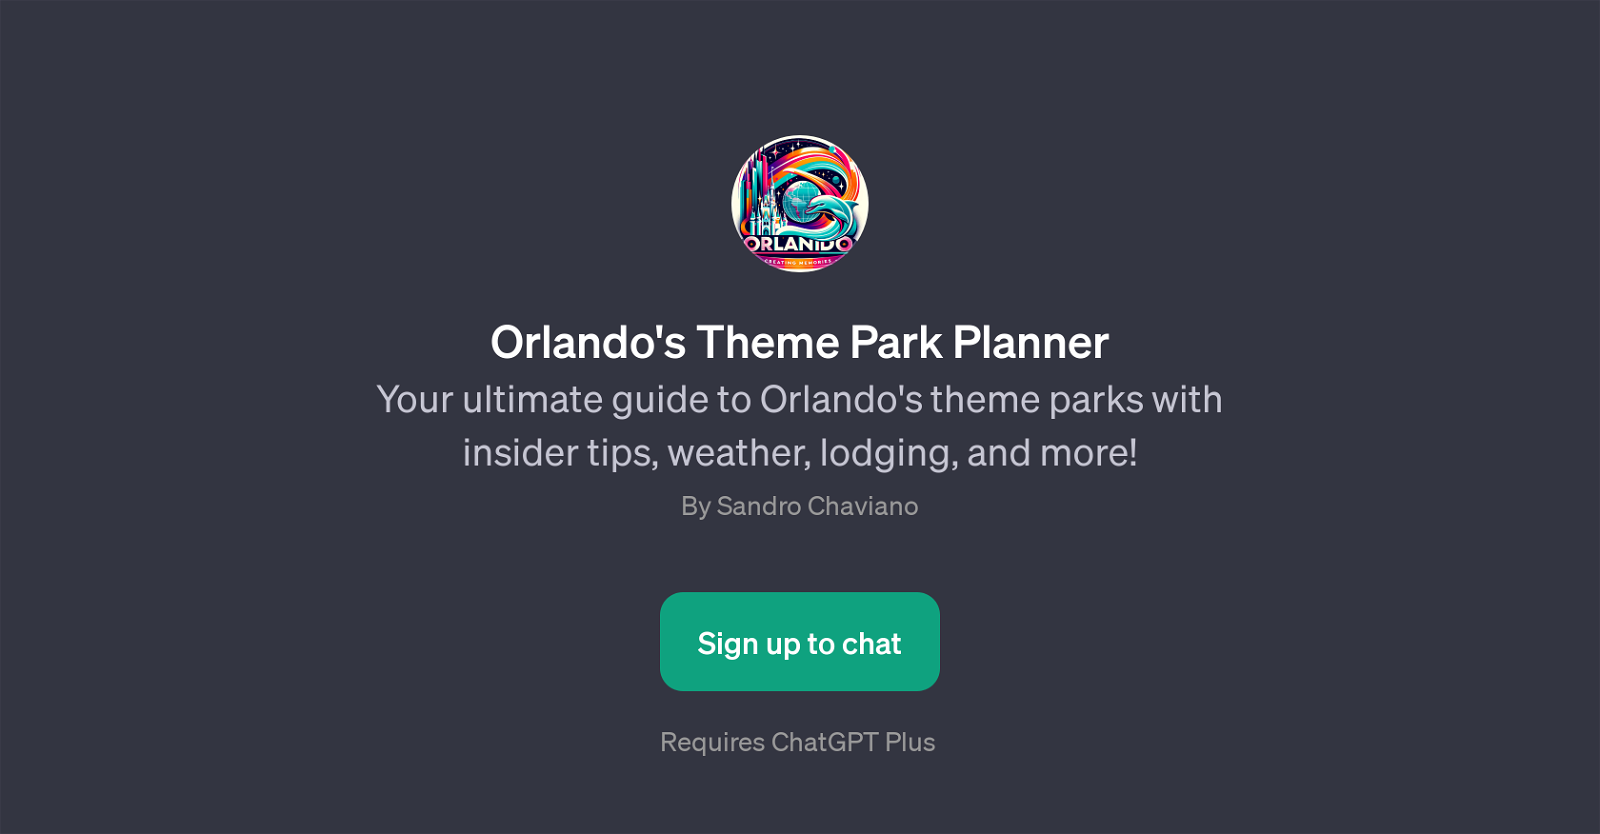 Orlando's Theme Park Planner website